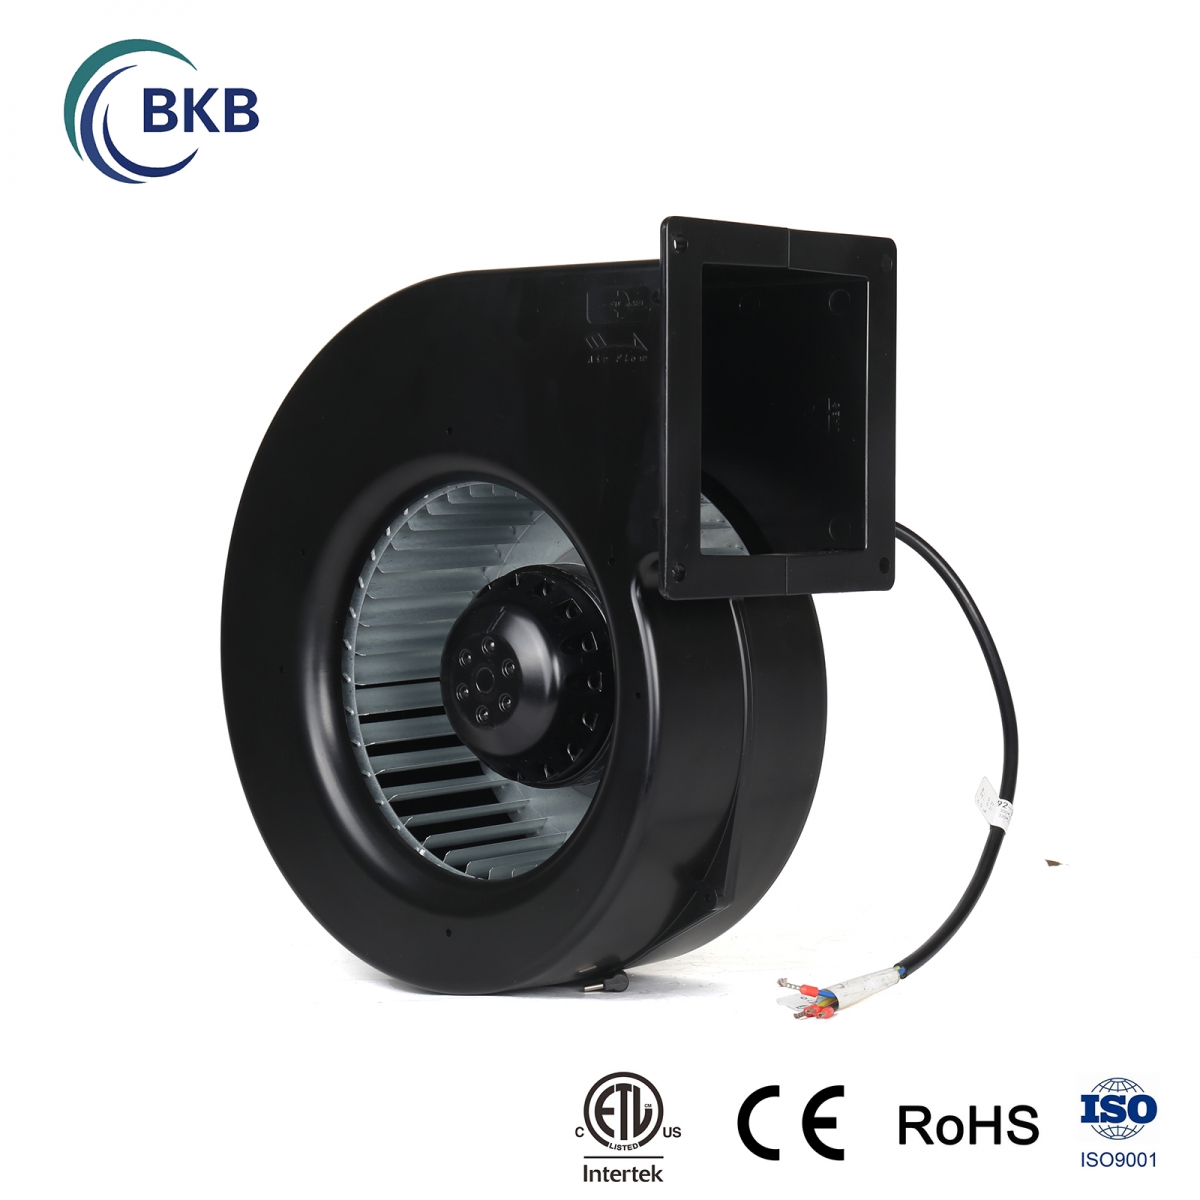 Características y aplicación del ventilador centrífugo-SUNLIGHT BLOWER,Centrifugal Fans, Inline Fans,Motors,Backward curved centrifugal fans ,Forward curved centrifugal fans ,inlet fans, EC fans